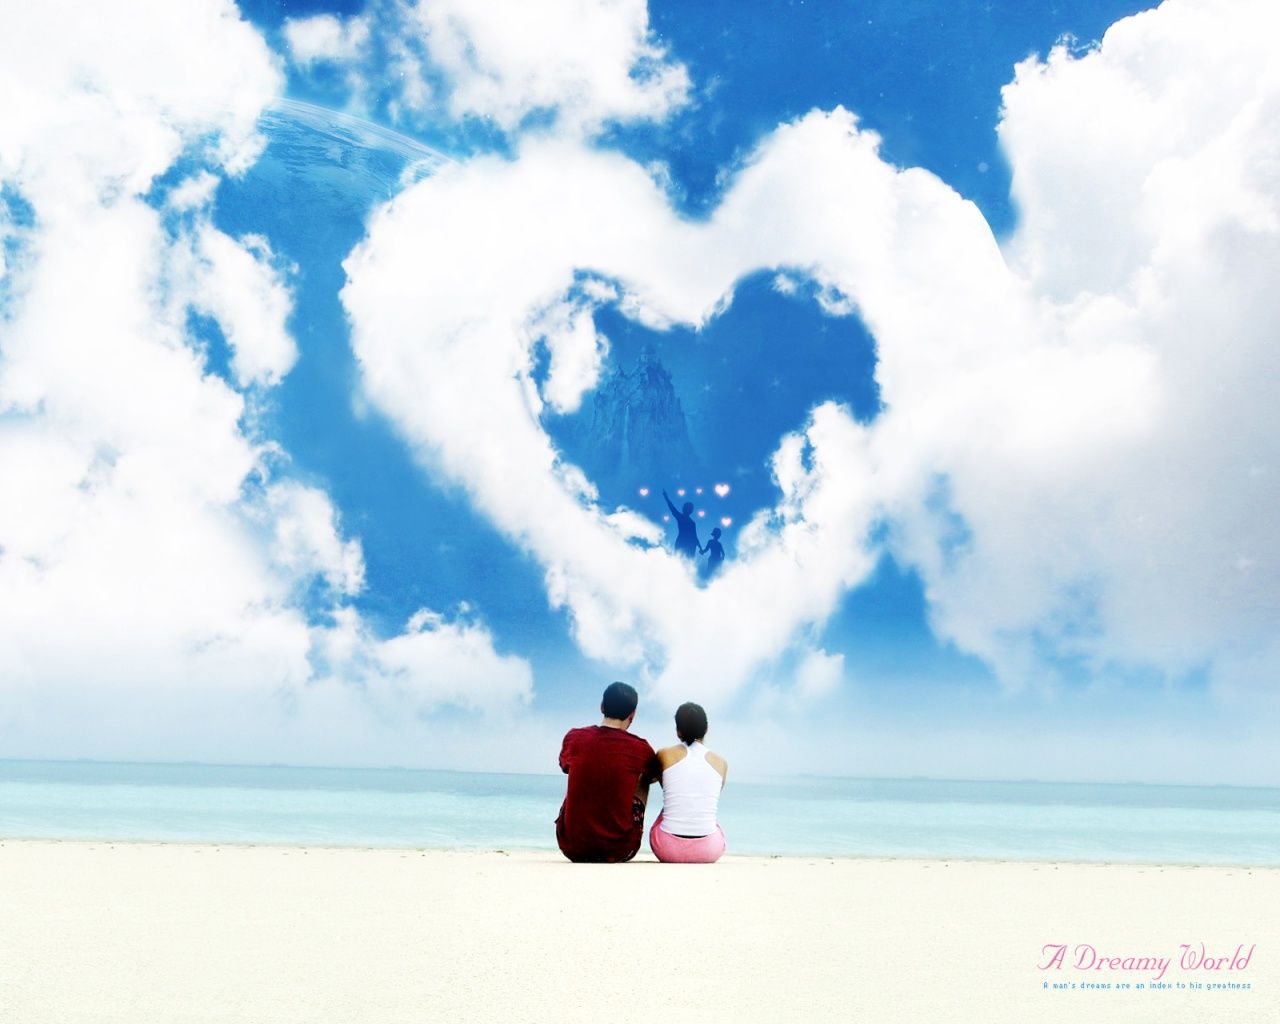 Dreamy Love World Wallpaper in jpg format for free download